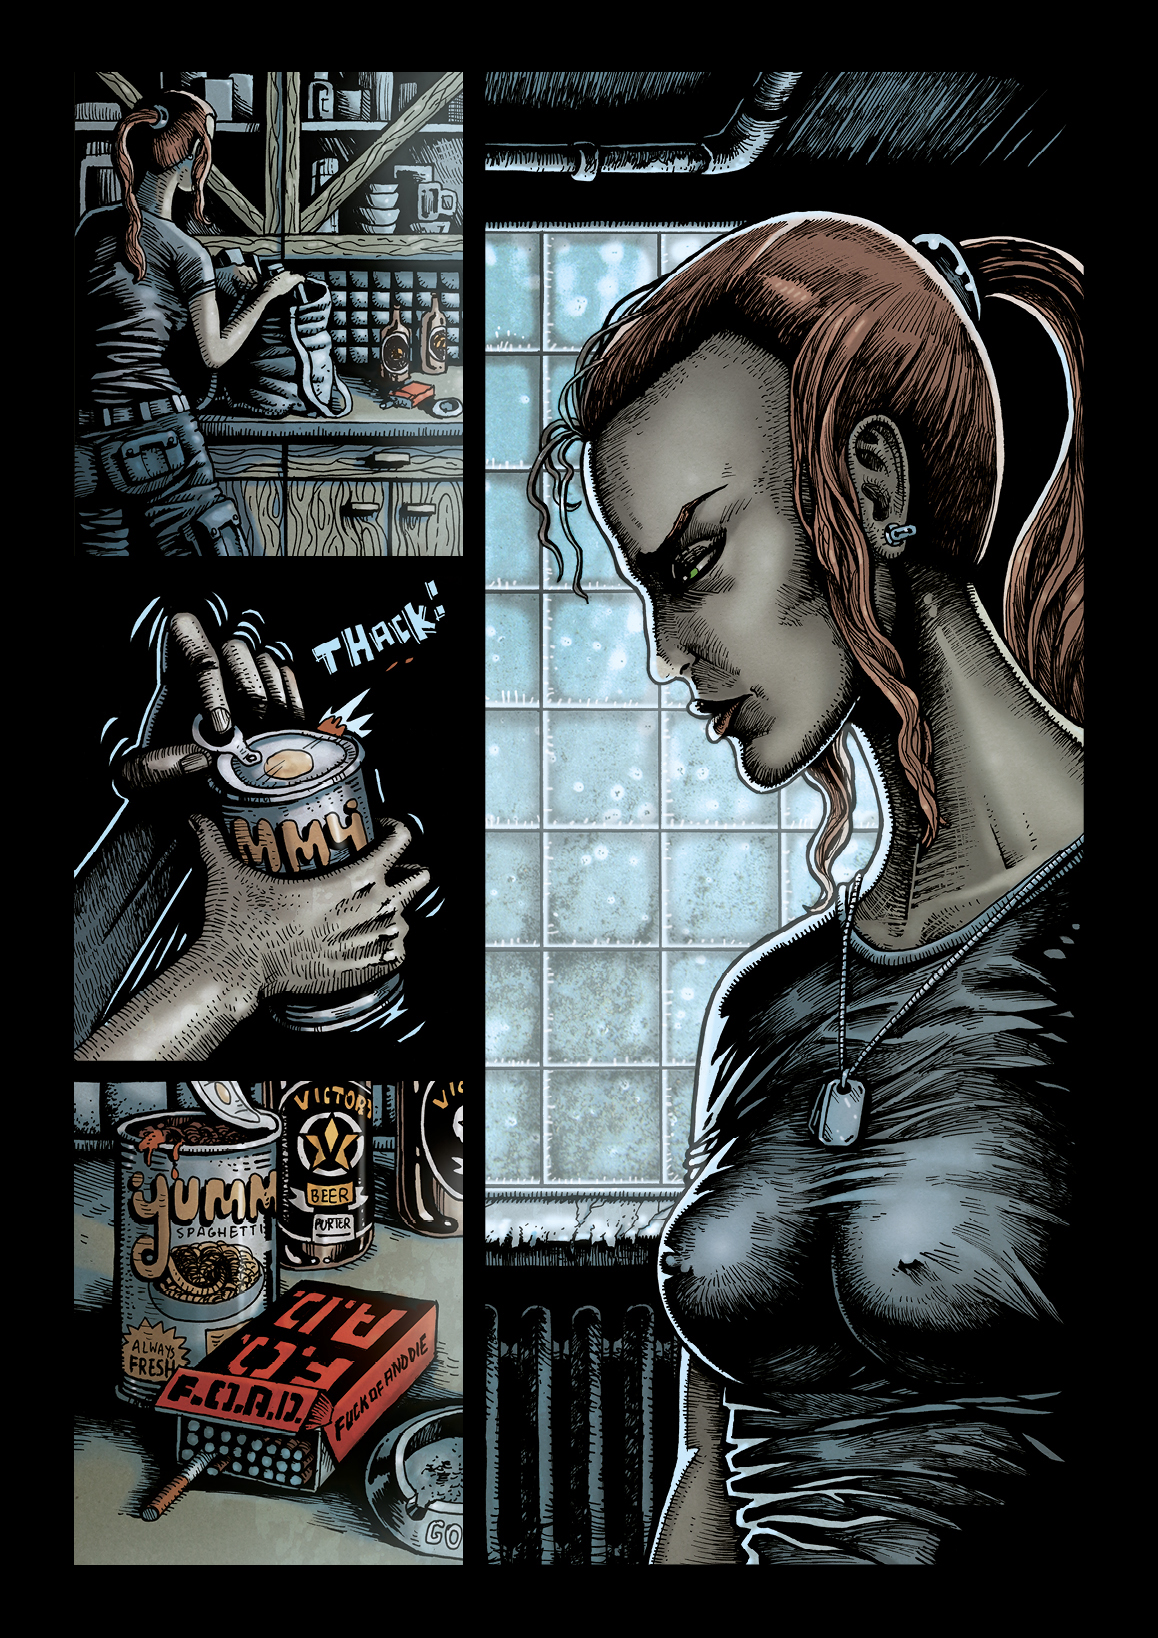 soldier sub zero comics Sciencefiction Graphic Novel comicbook city soldier sci-fi